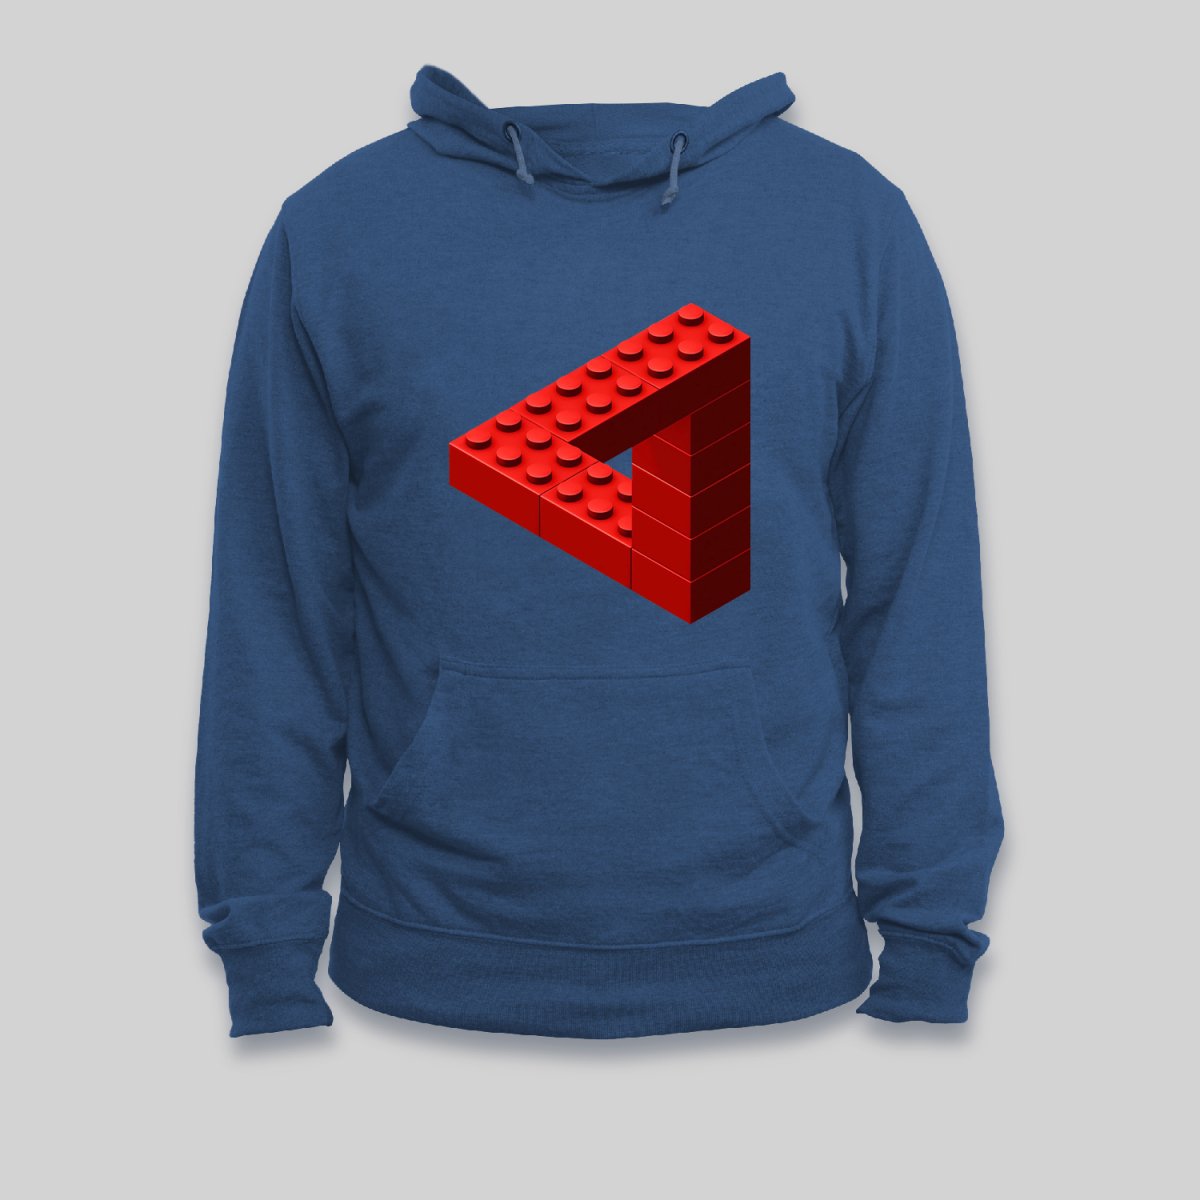 Escher Toy Bricks Hoodie - Geeksoutfit